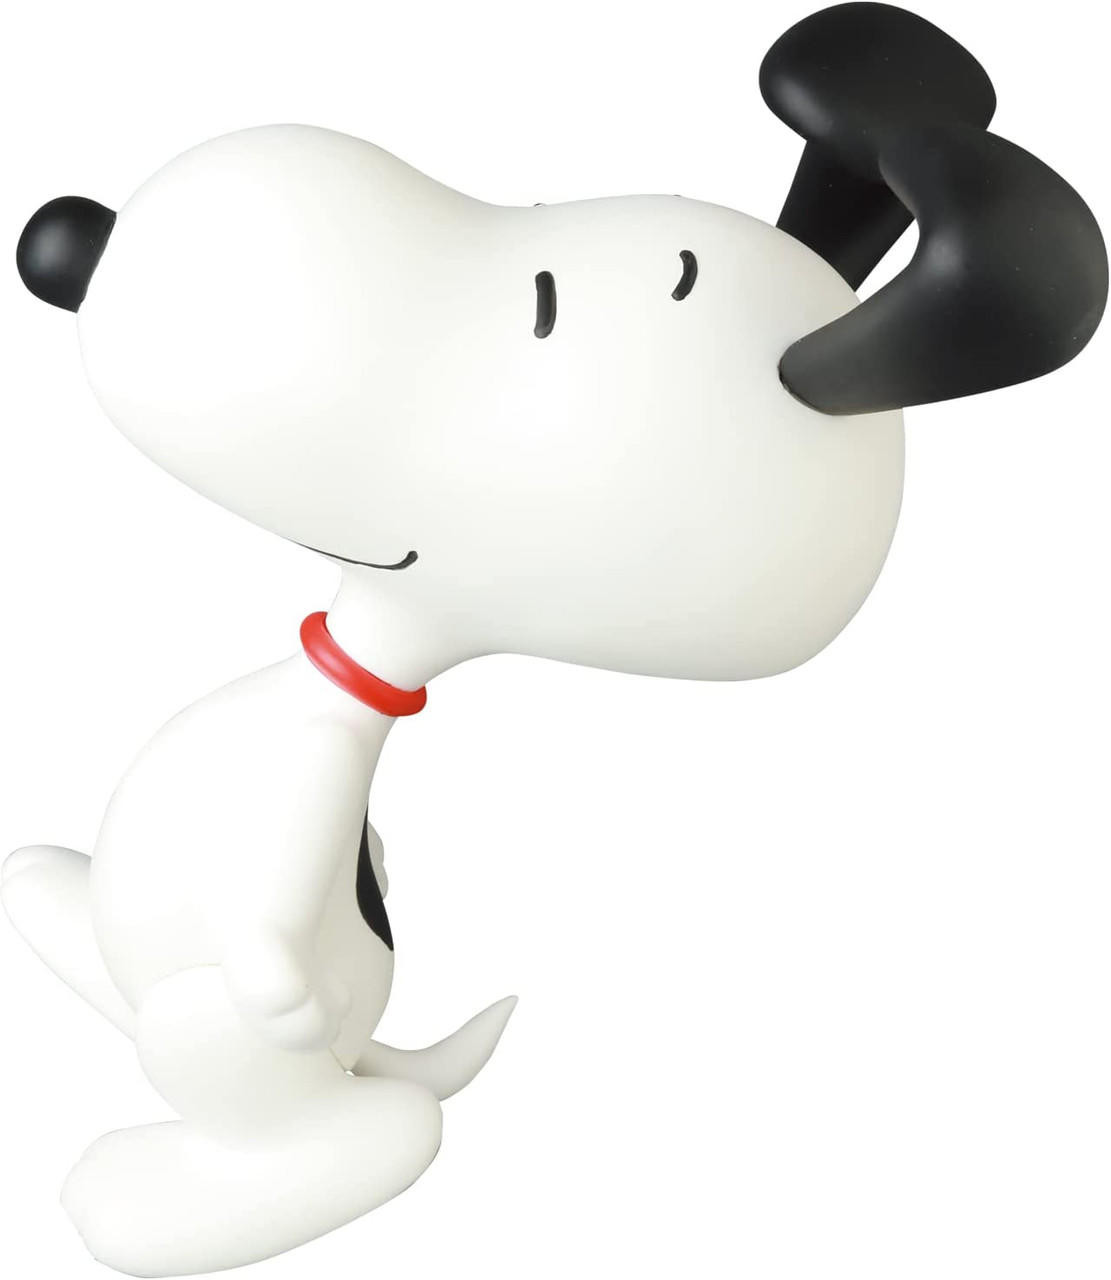 Peanuts Hopping Snoopy VCD Figure Medicom Toys